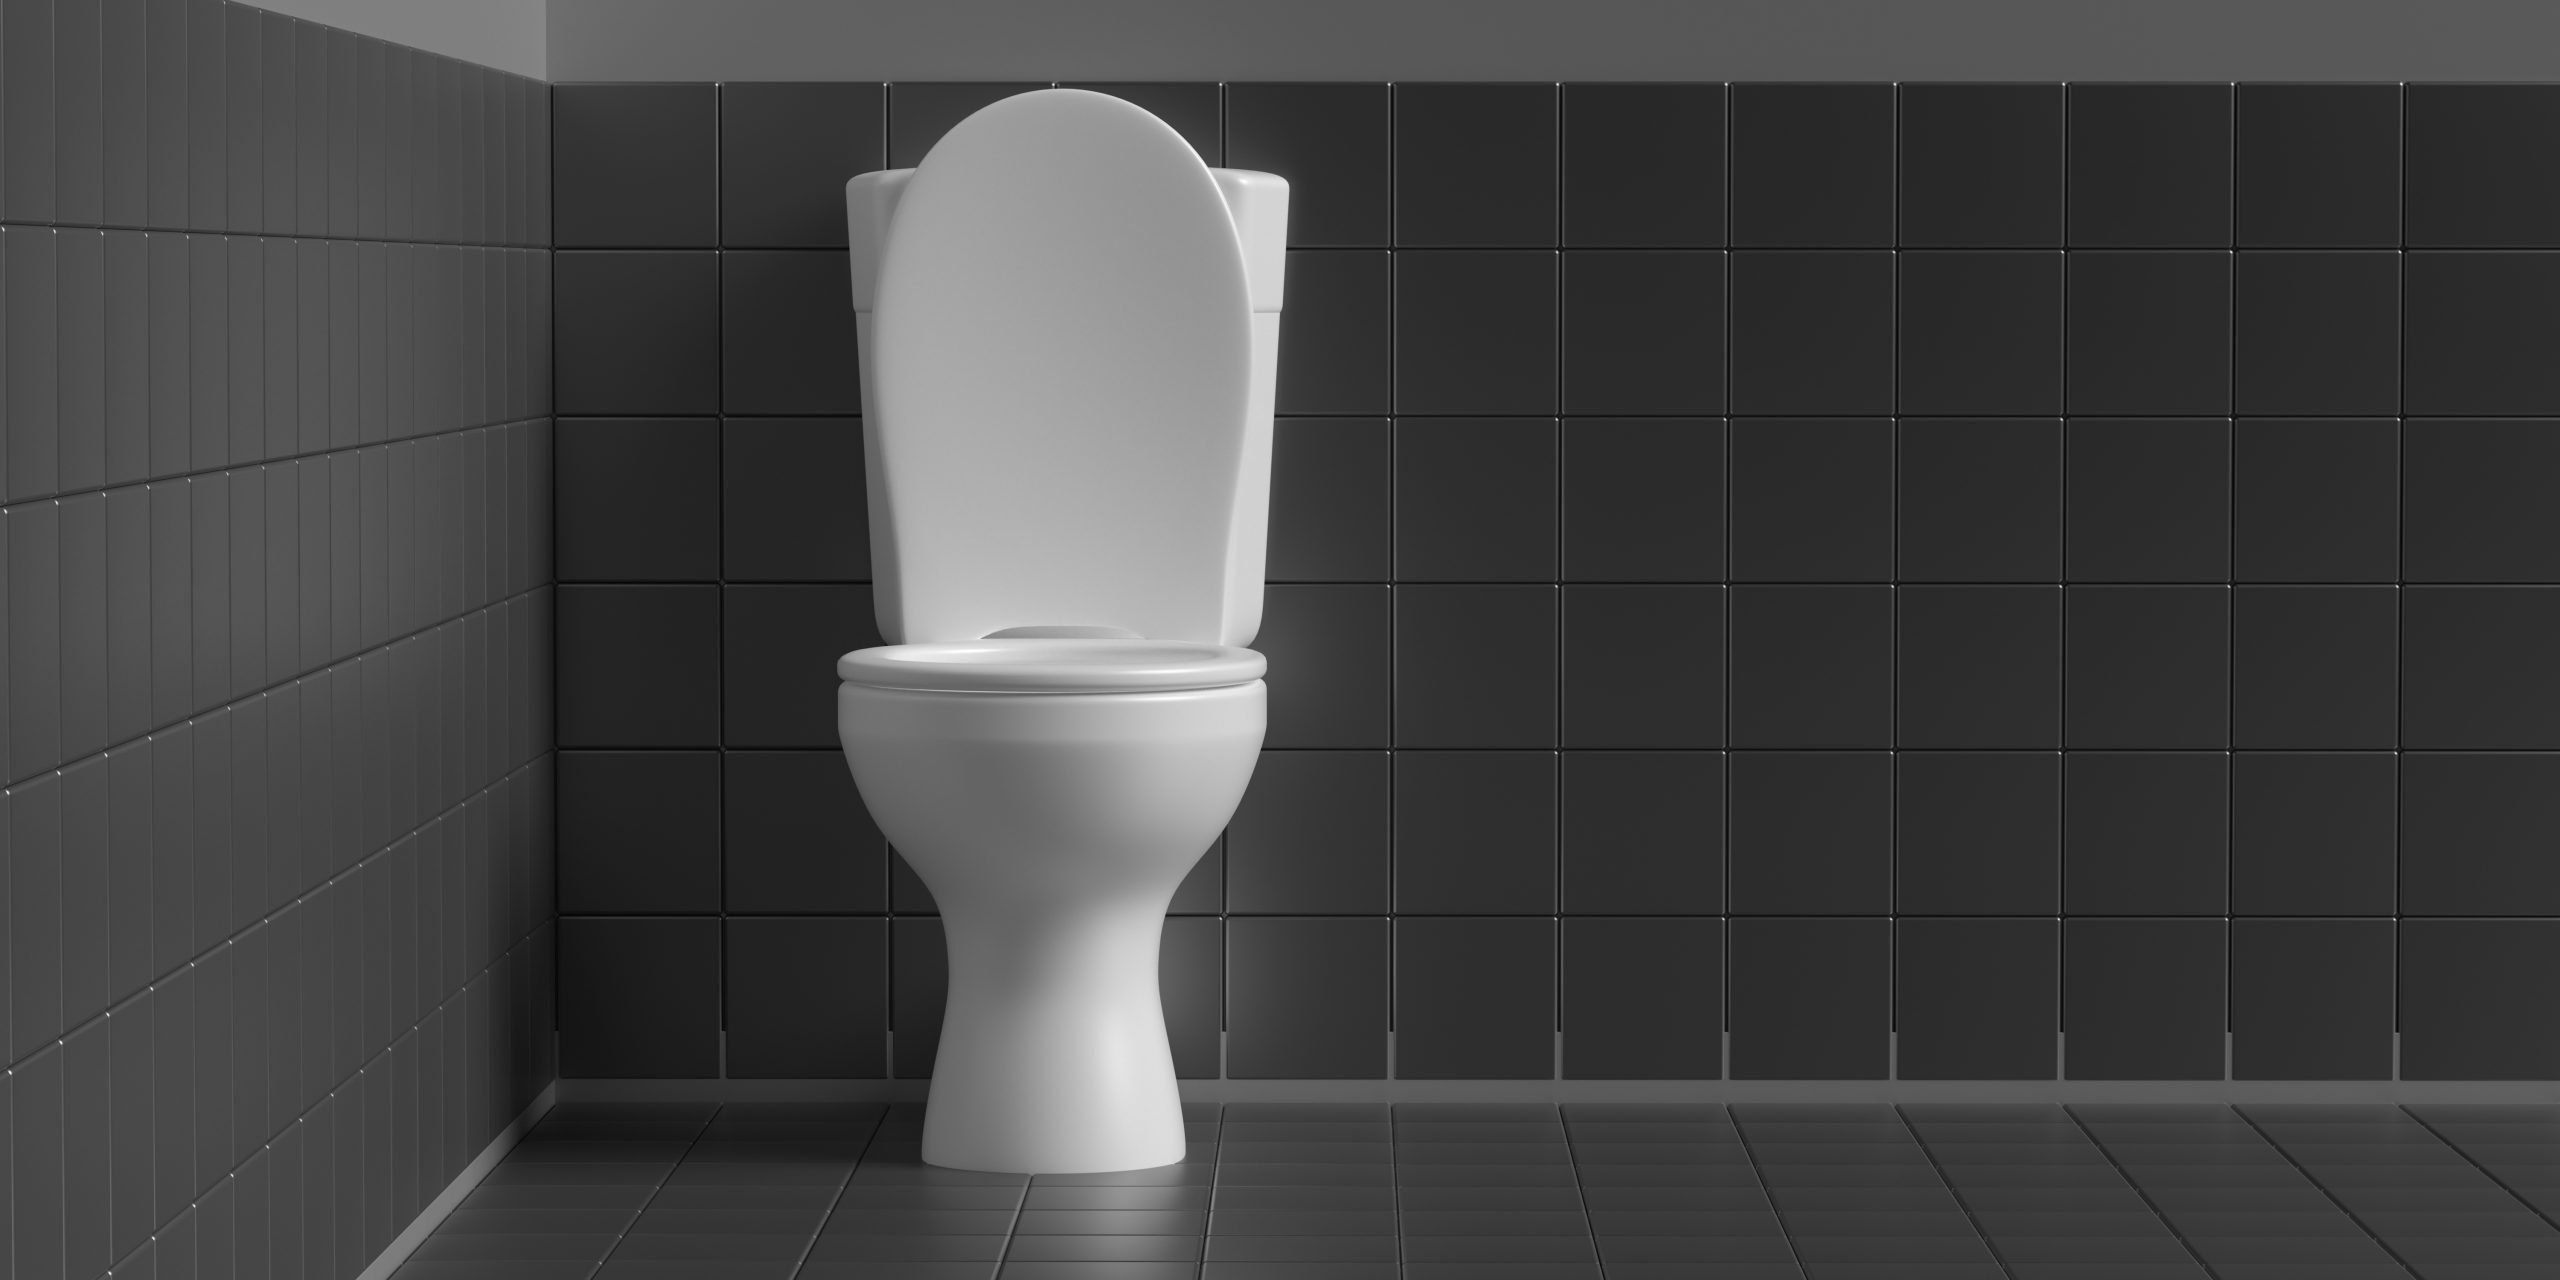 Toilet Installation Repair Services